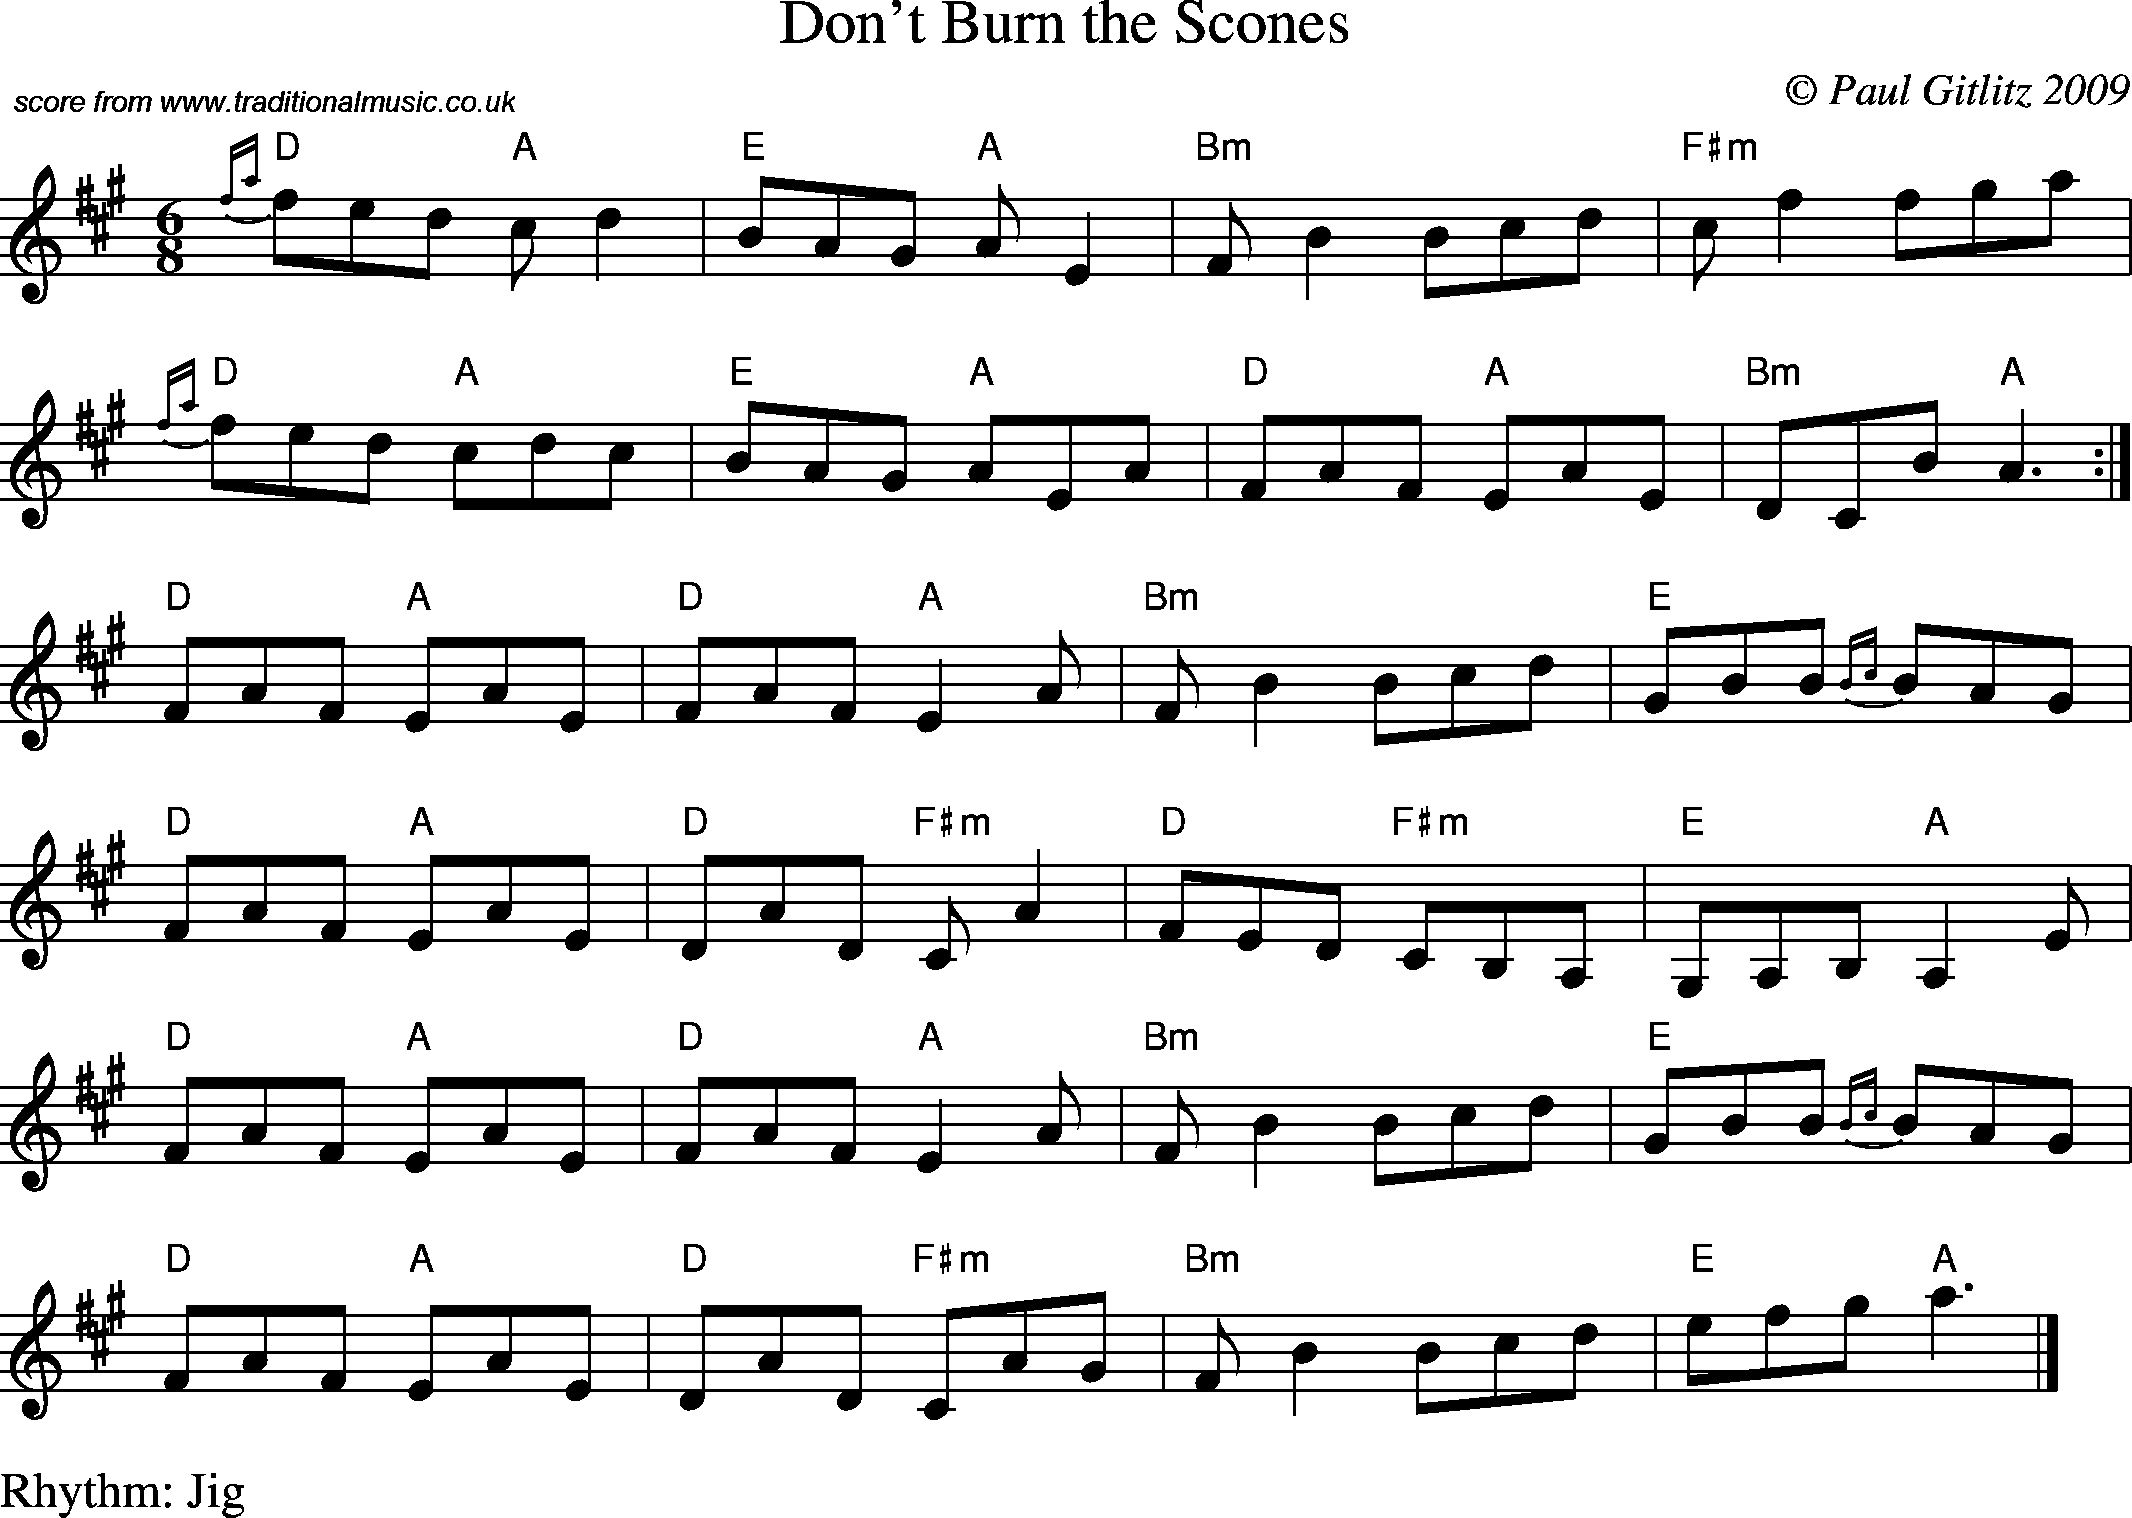 Sheet Music Score for Jig - Don't Burn the Scones